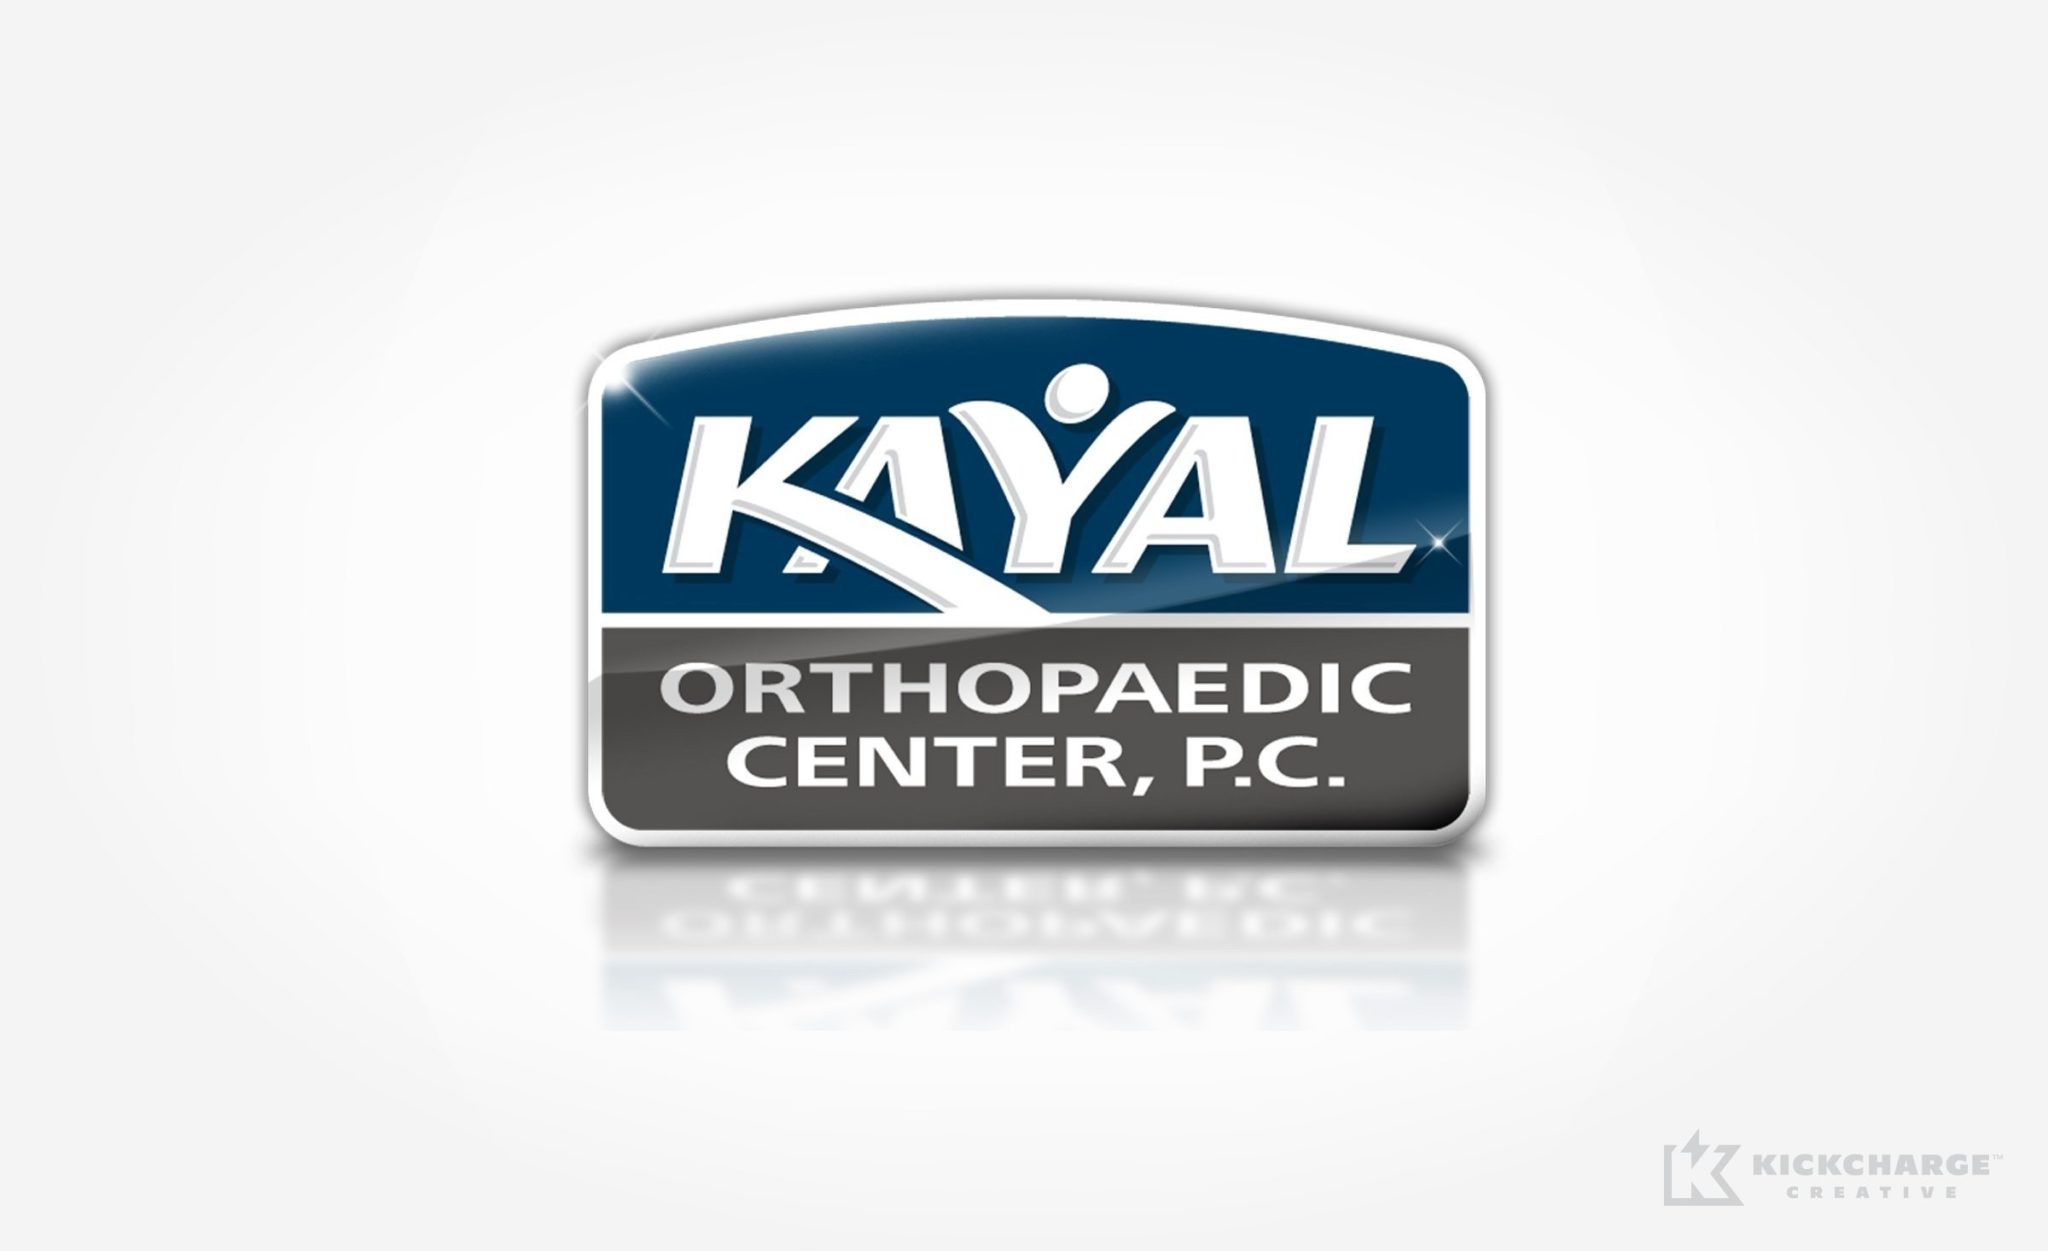 Kayal Orthopaedic Center